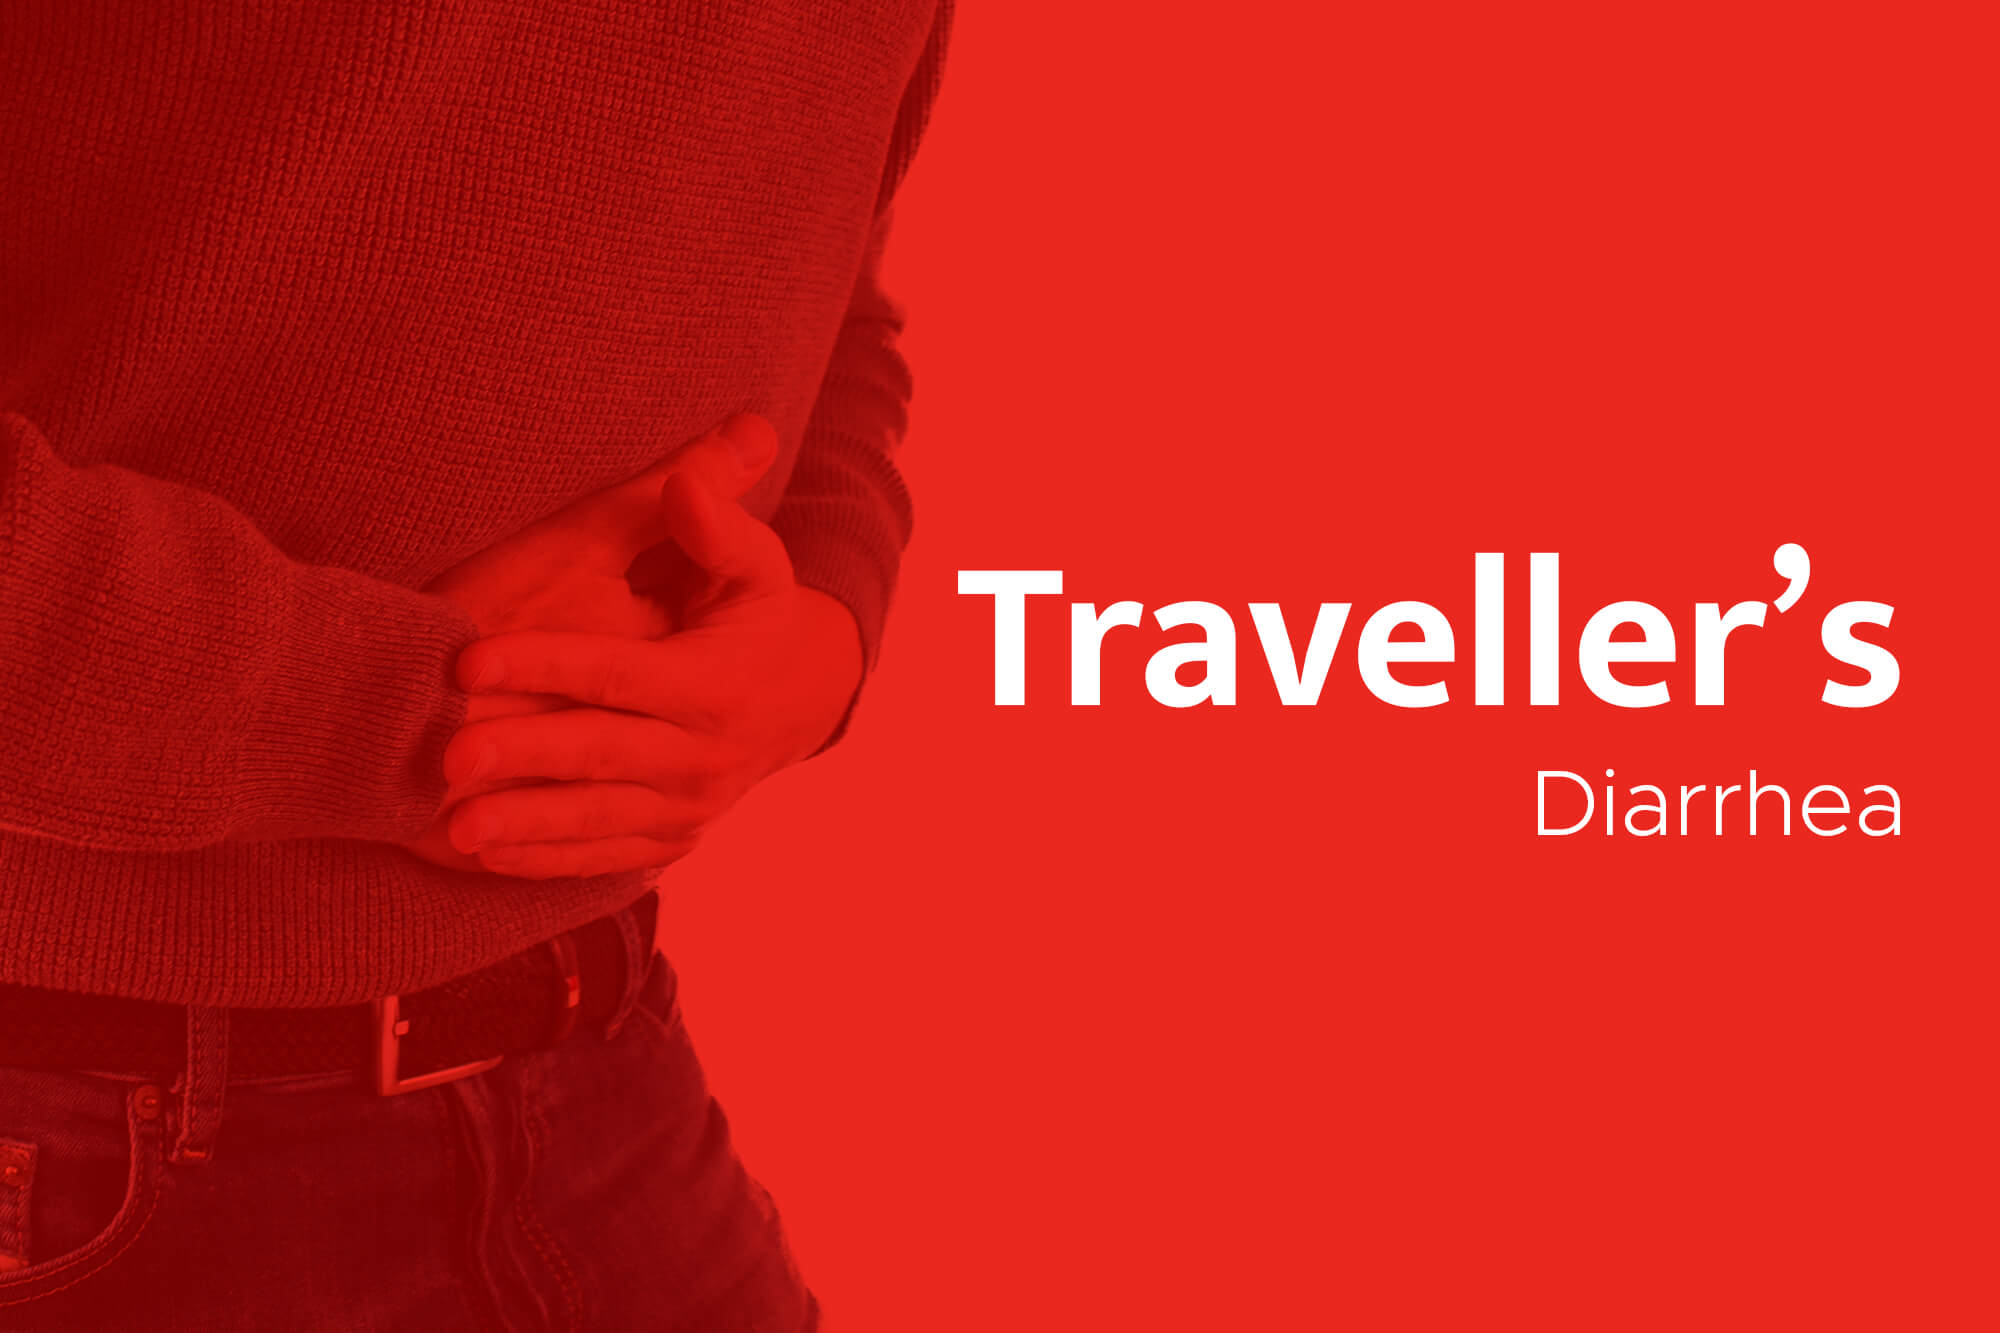 Traveller’s Diarrhea